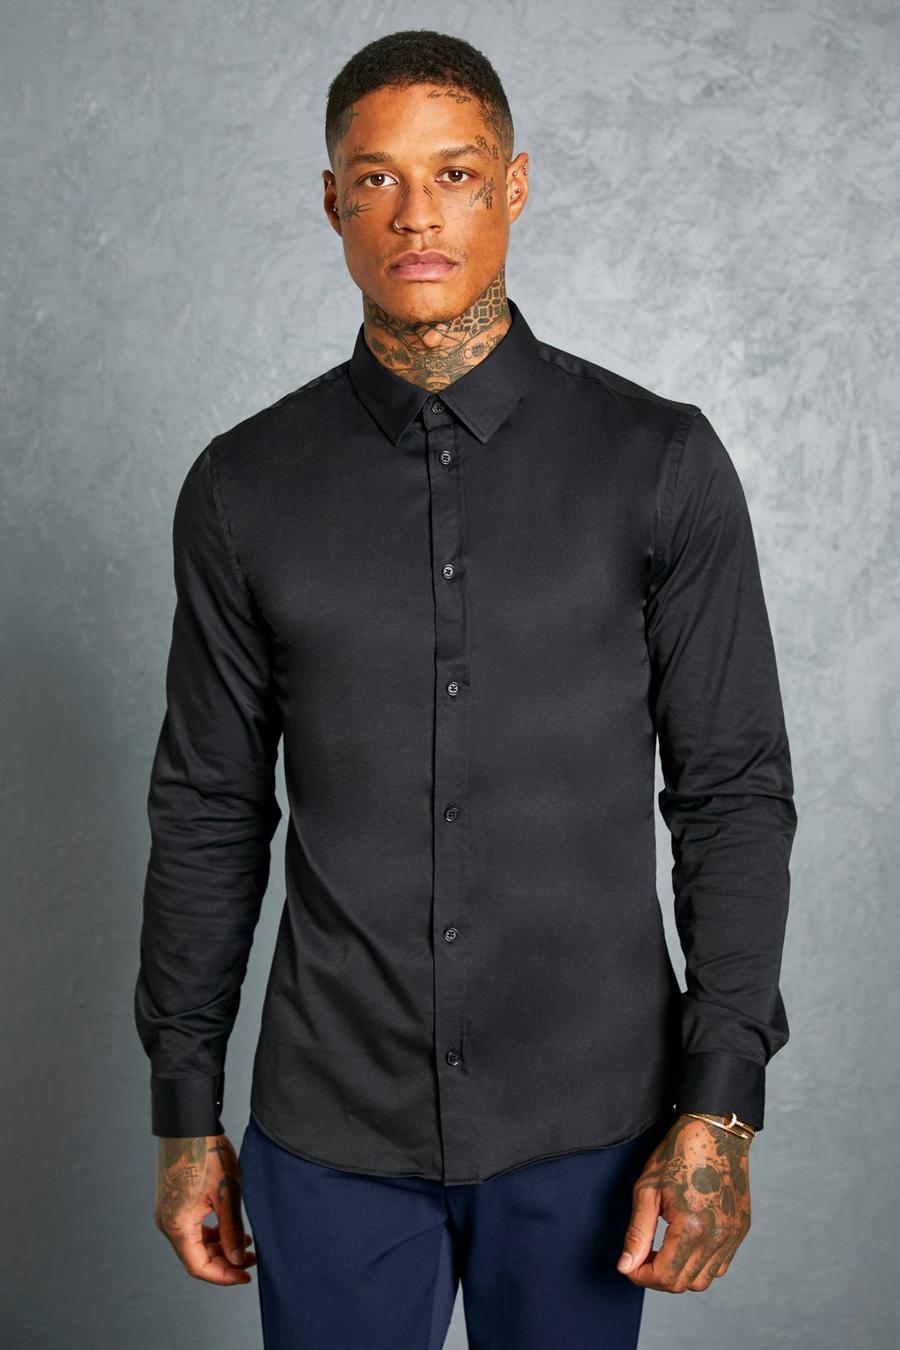 Black svart Långärmad skjorta i slim fit